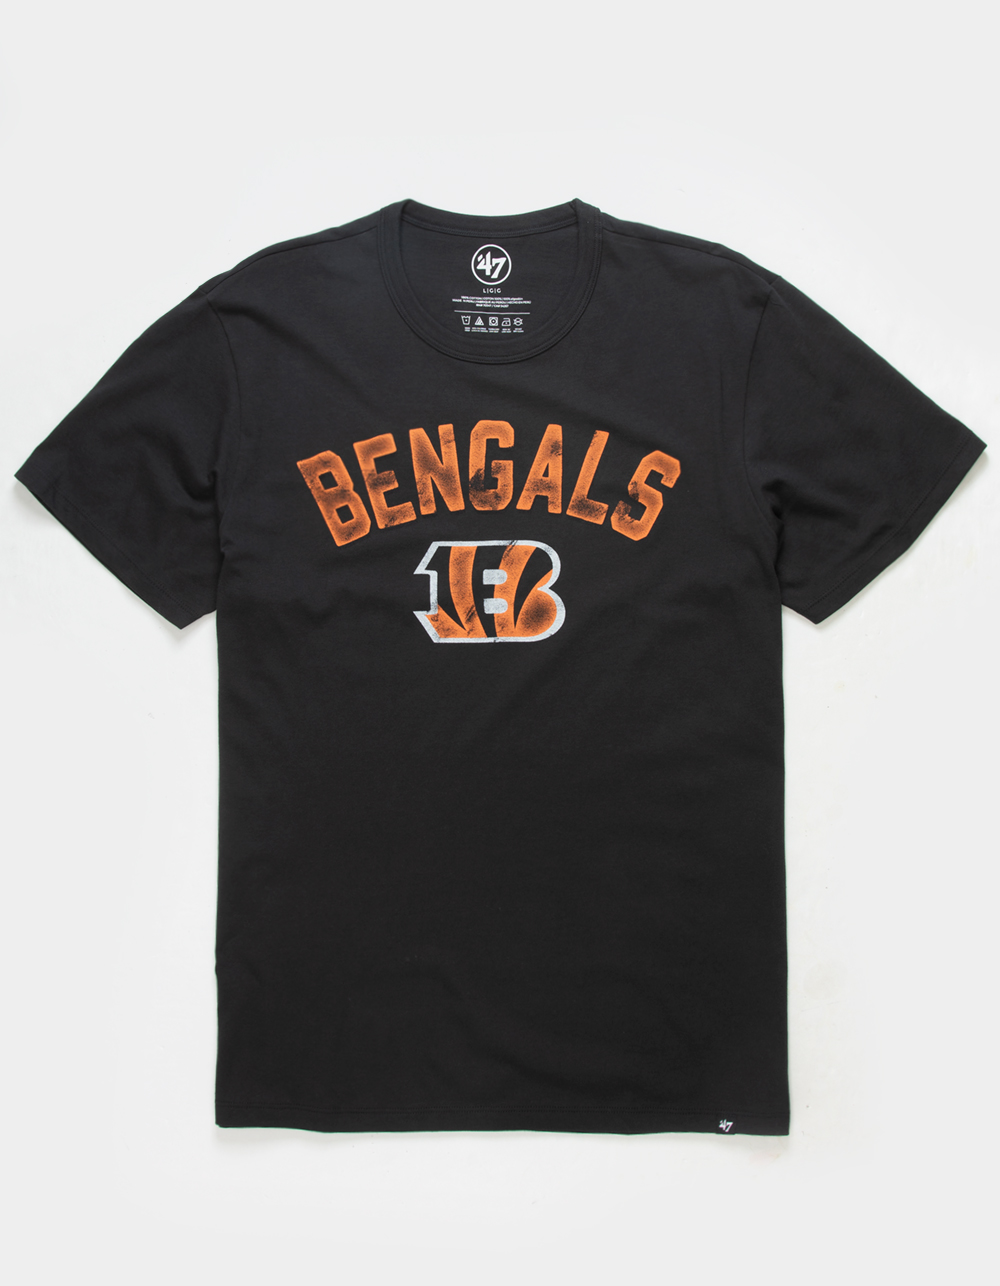 Reebok Cincinnati Bengals *Green* NFL Nike Shirt L. Boys L